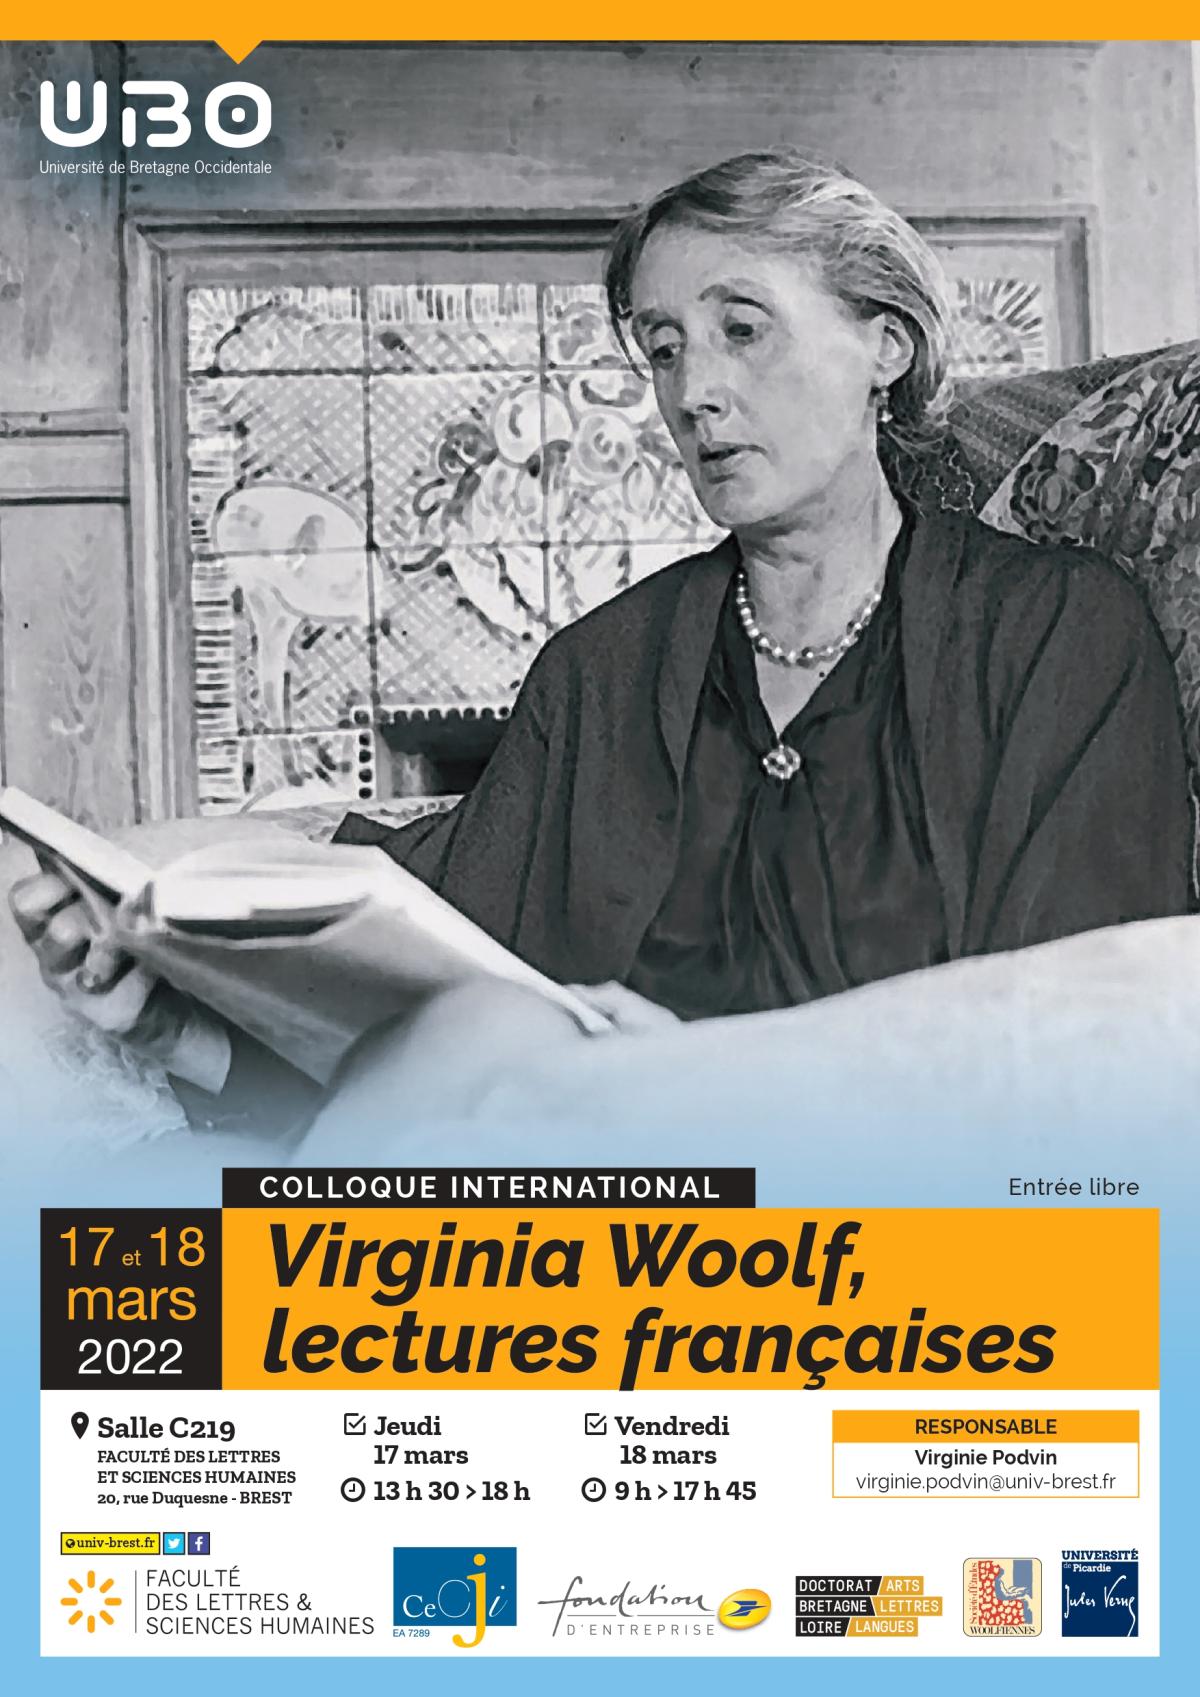 Virginia Woolf, lectures françaises